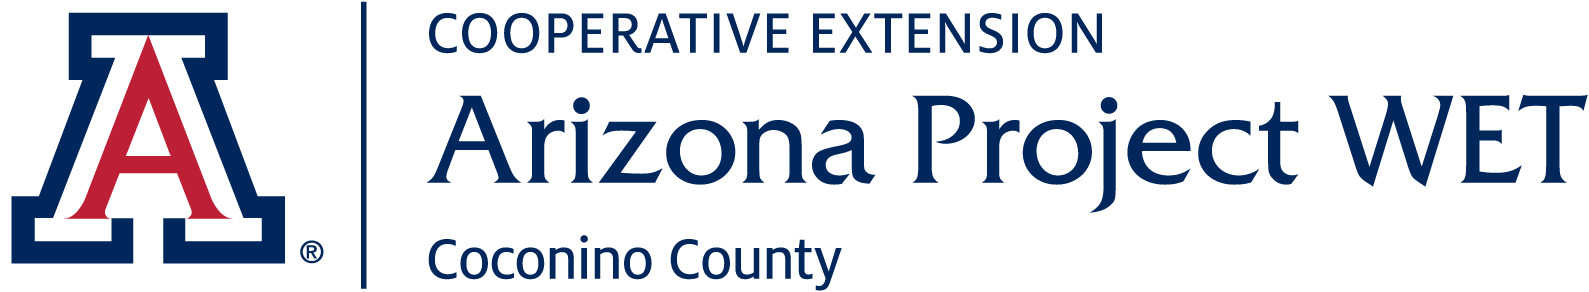 Arizona Project WET_Coconino County_Webheader.png